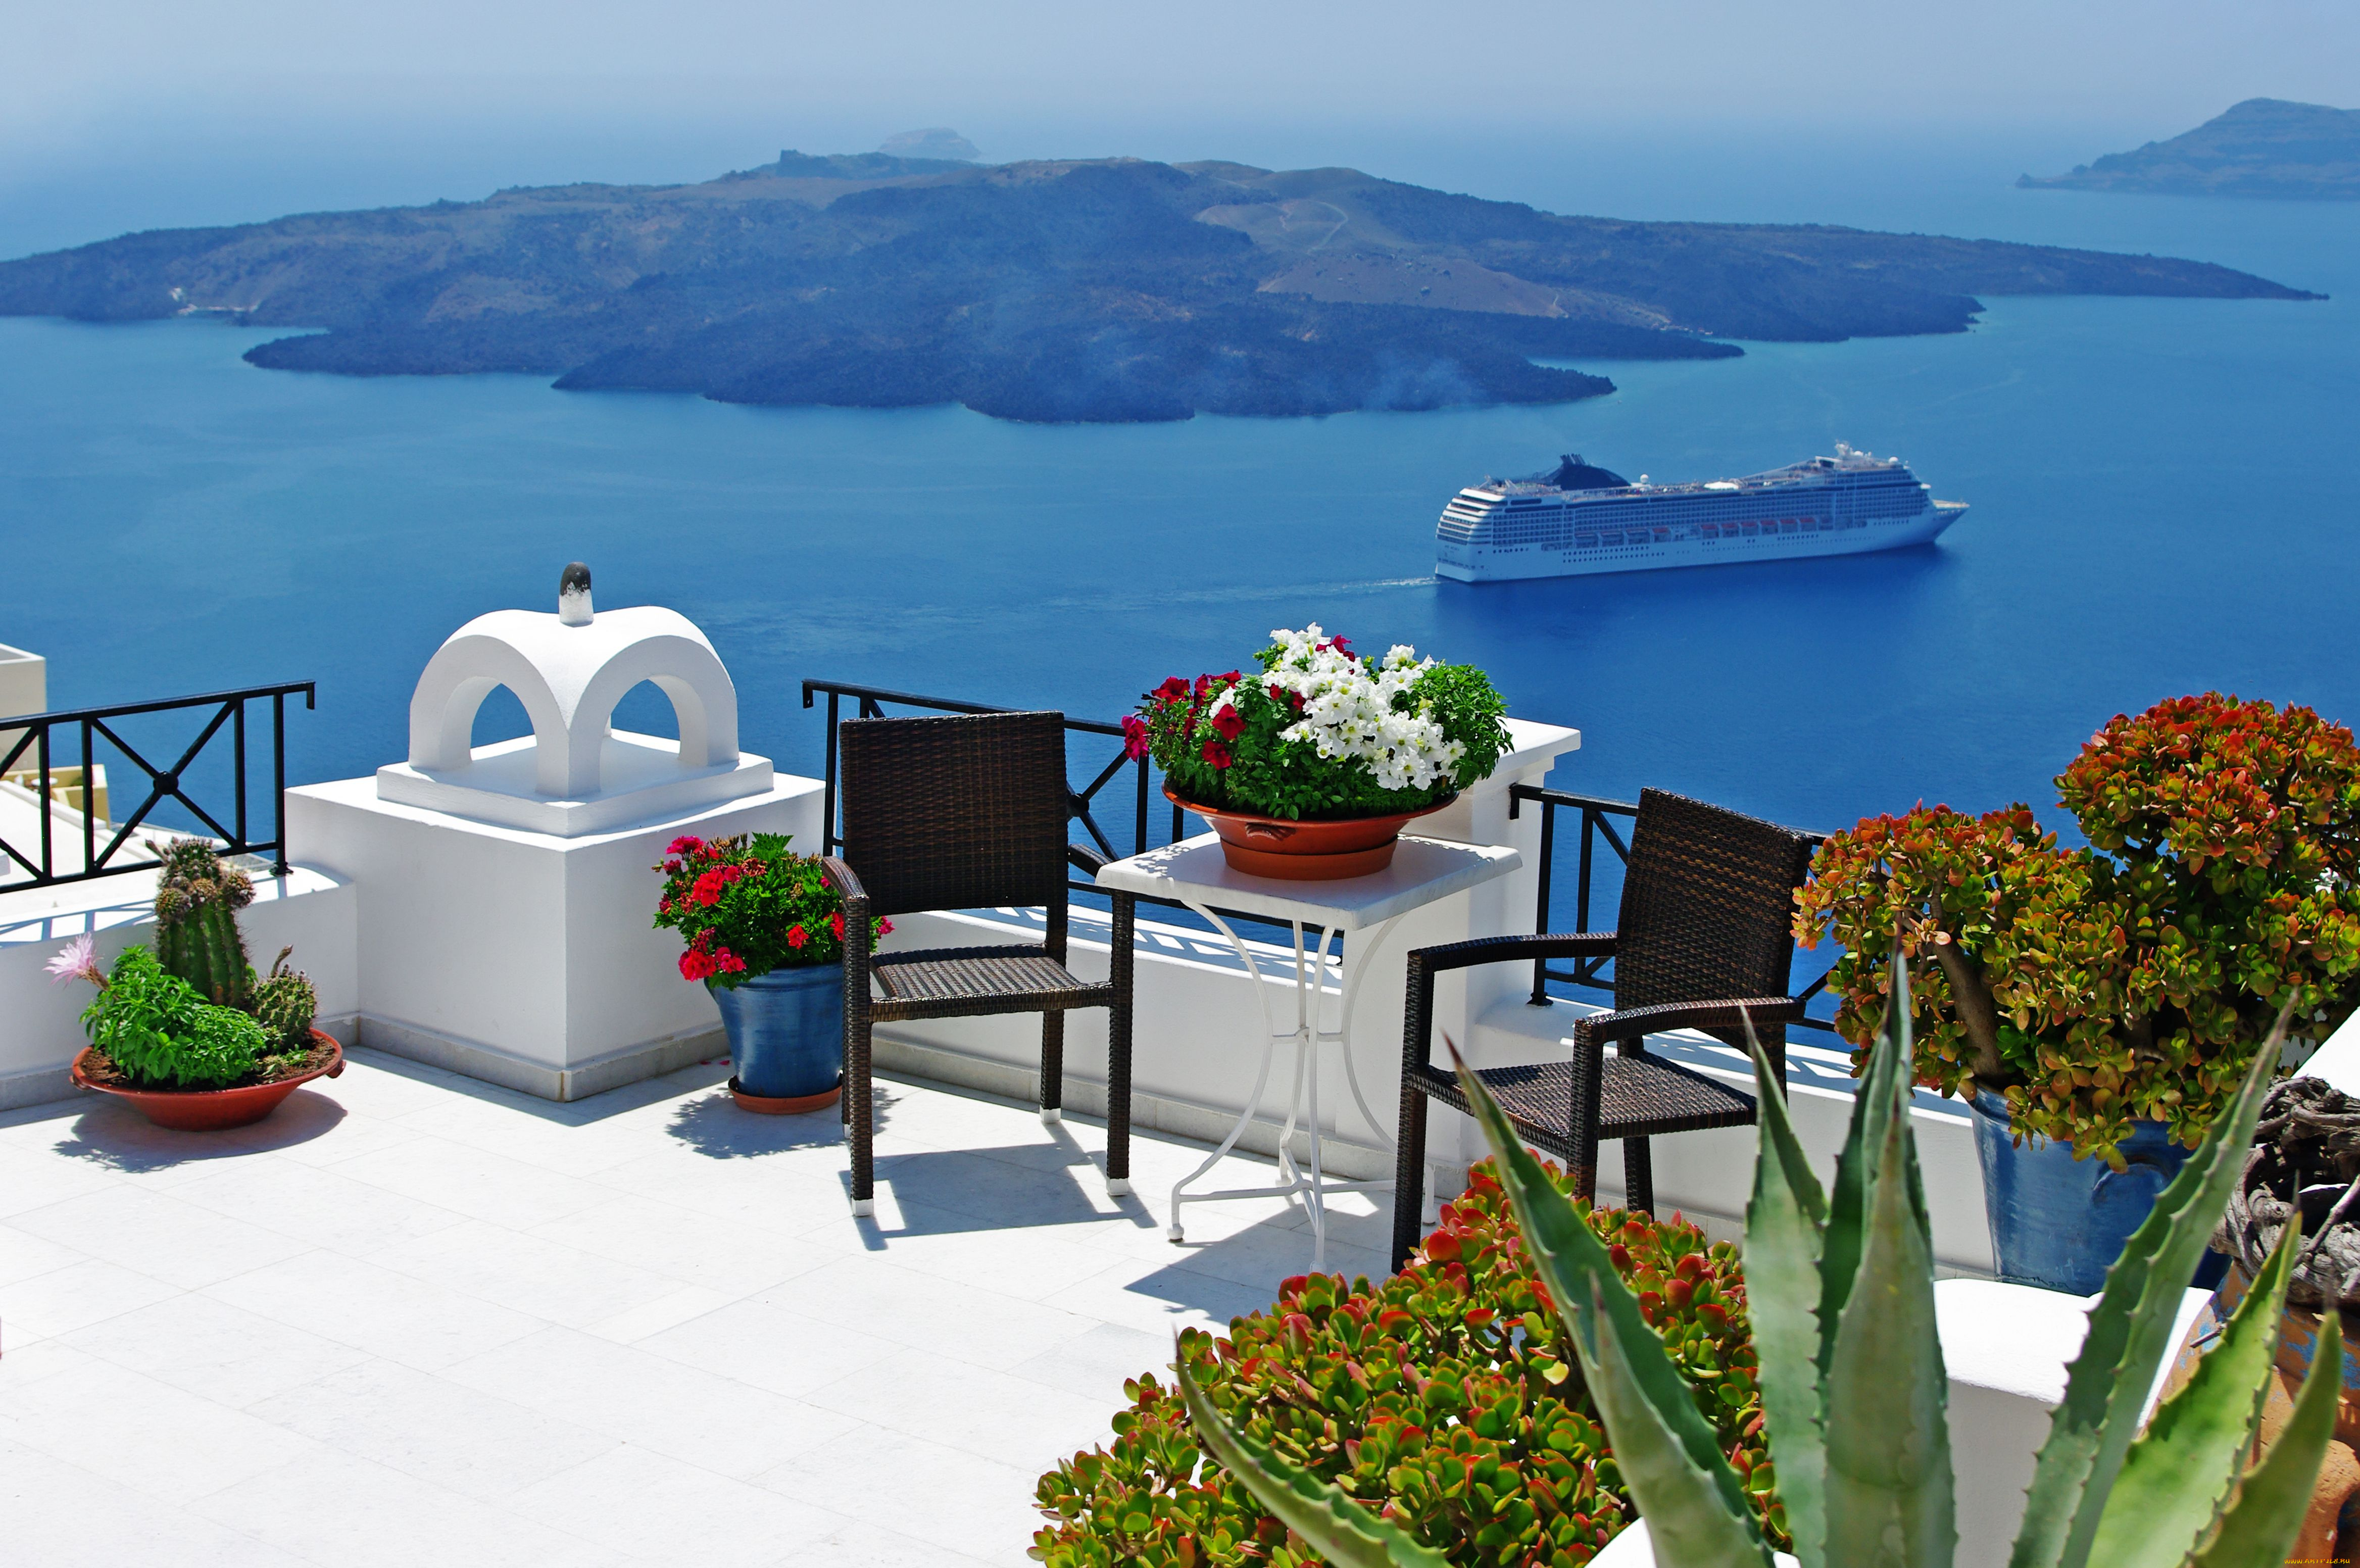 santorini, greece, интерьер, веранды, террасы, балконы, греция, море, лайнер, цветы, панорама, санторини